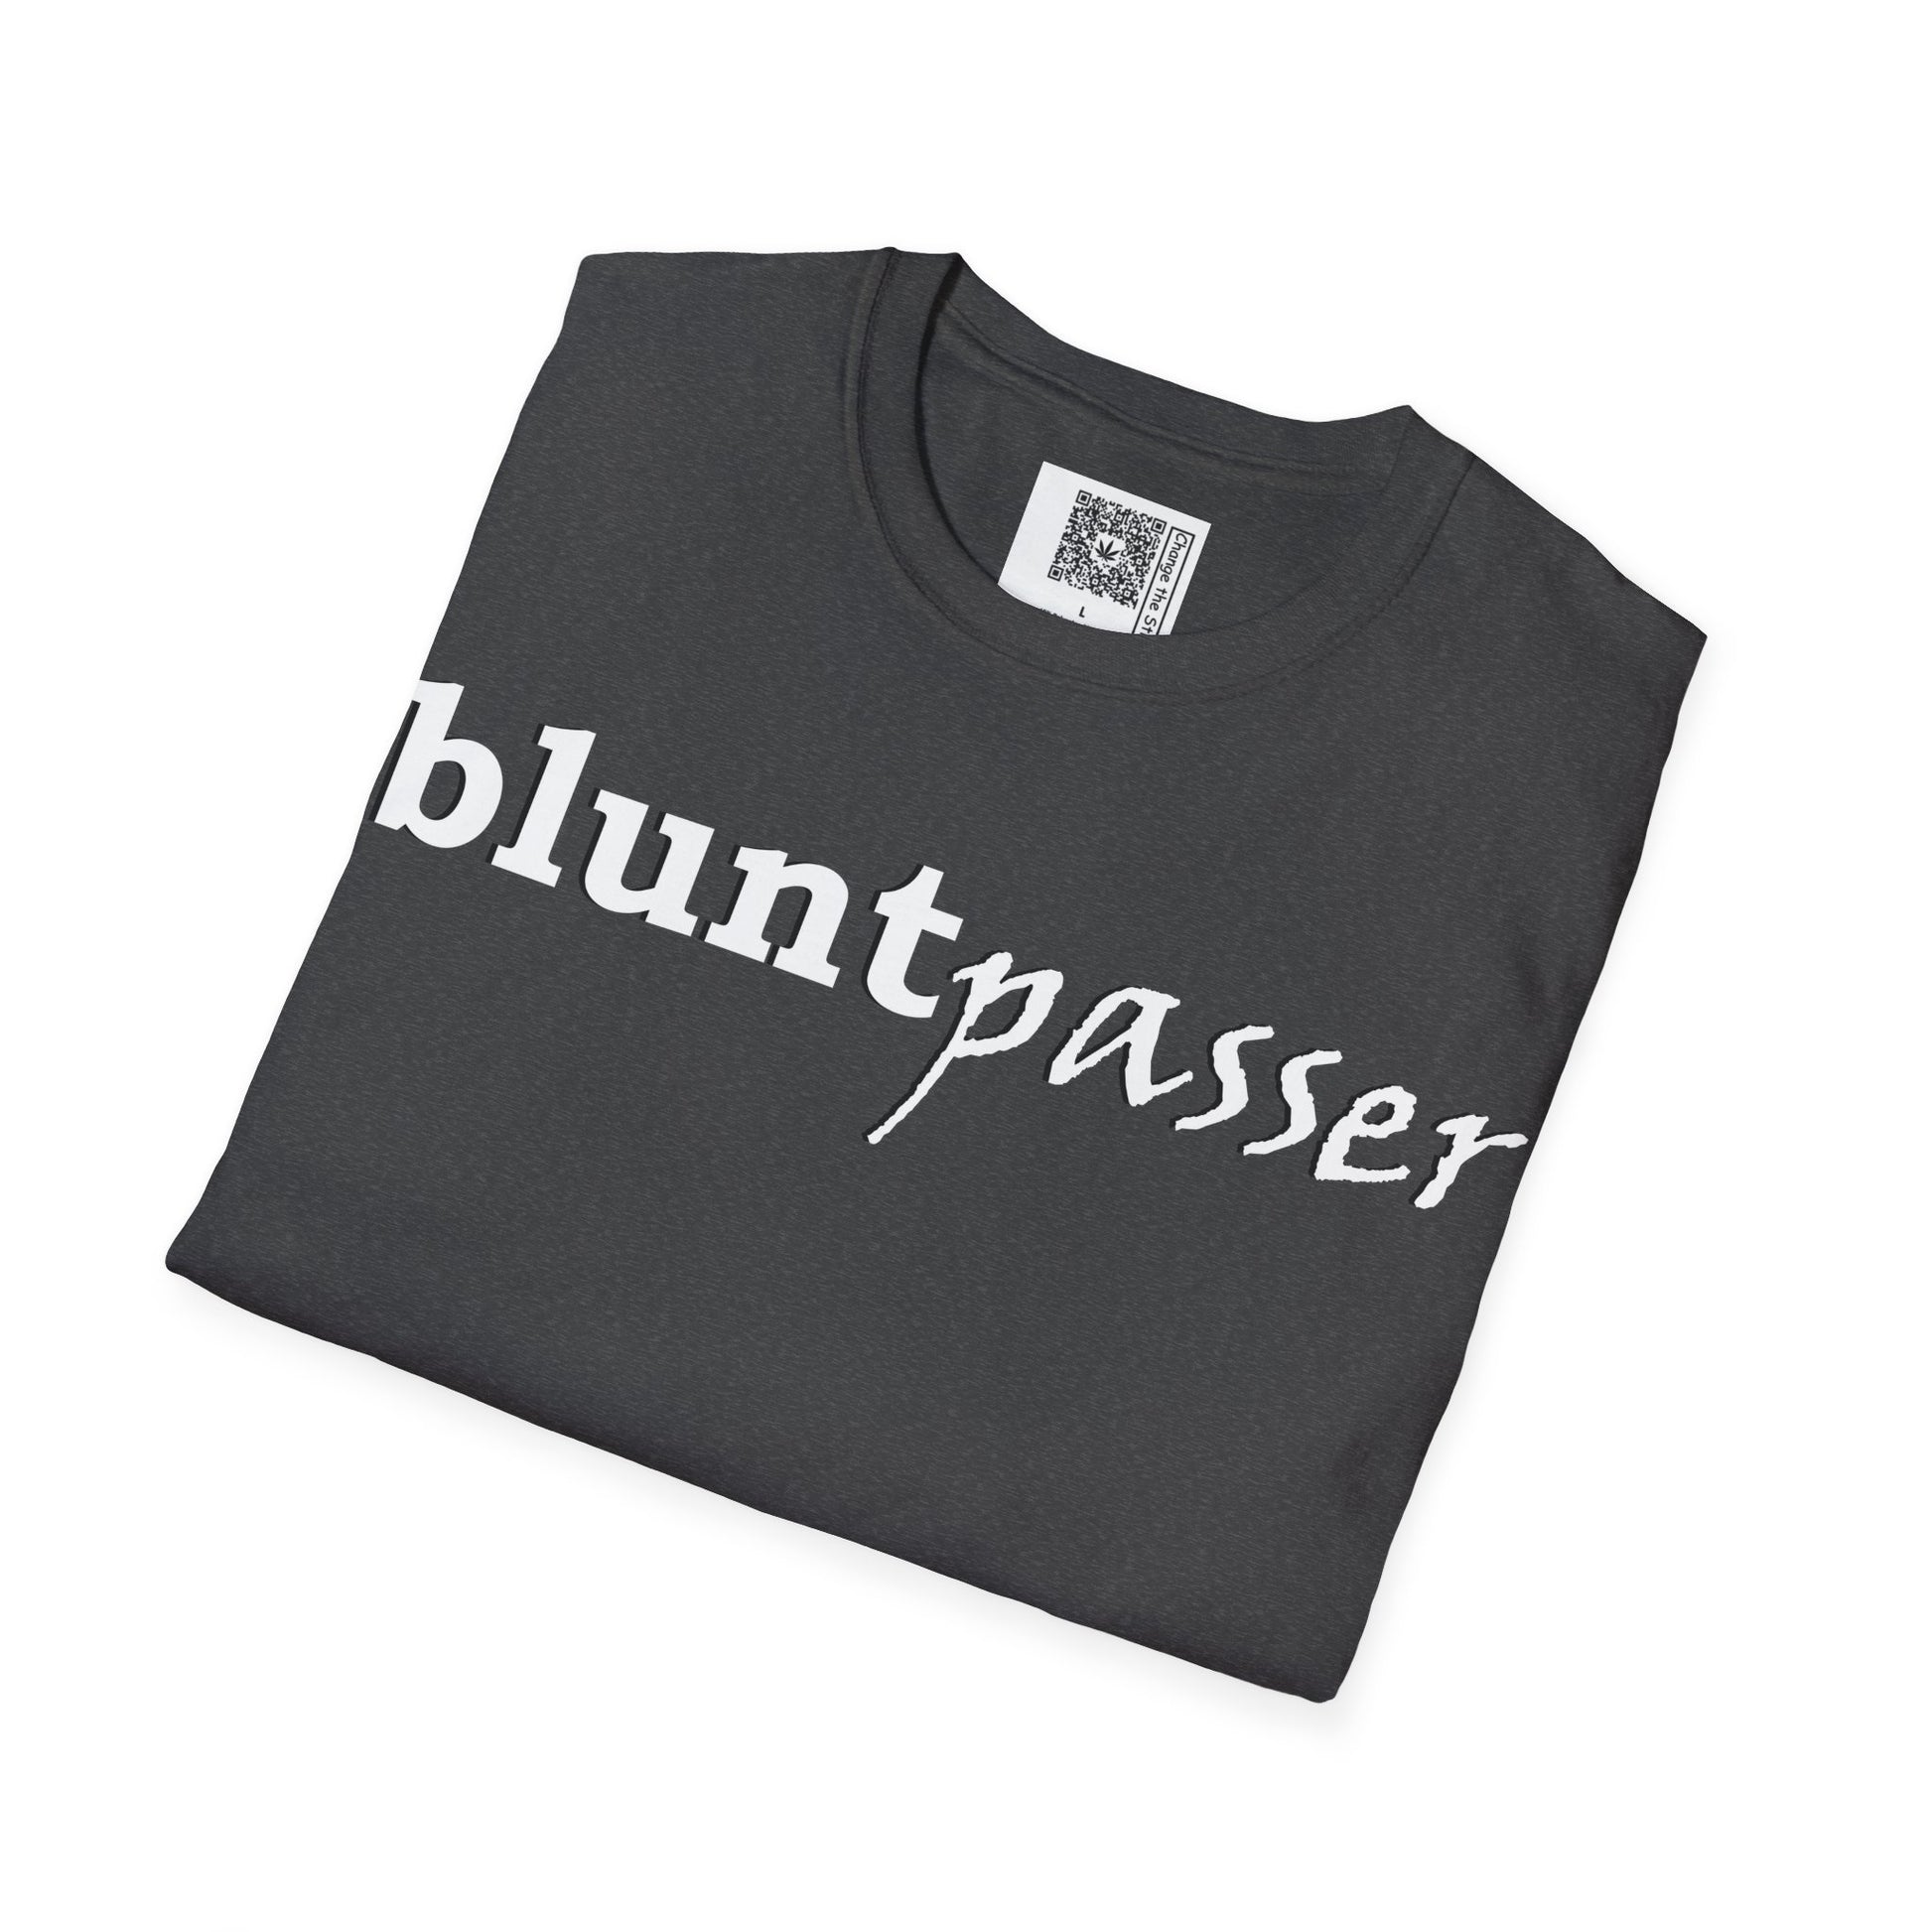 Change the Stigma, Dark Heather color, shirt saying "blunt passer", Folded, Qr code is shown